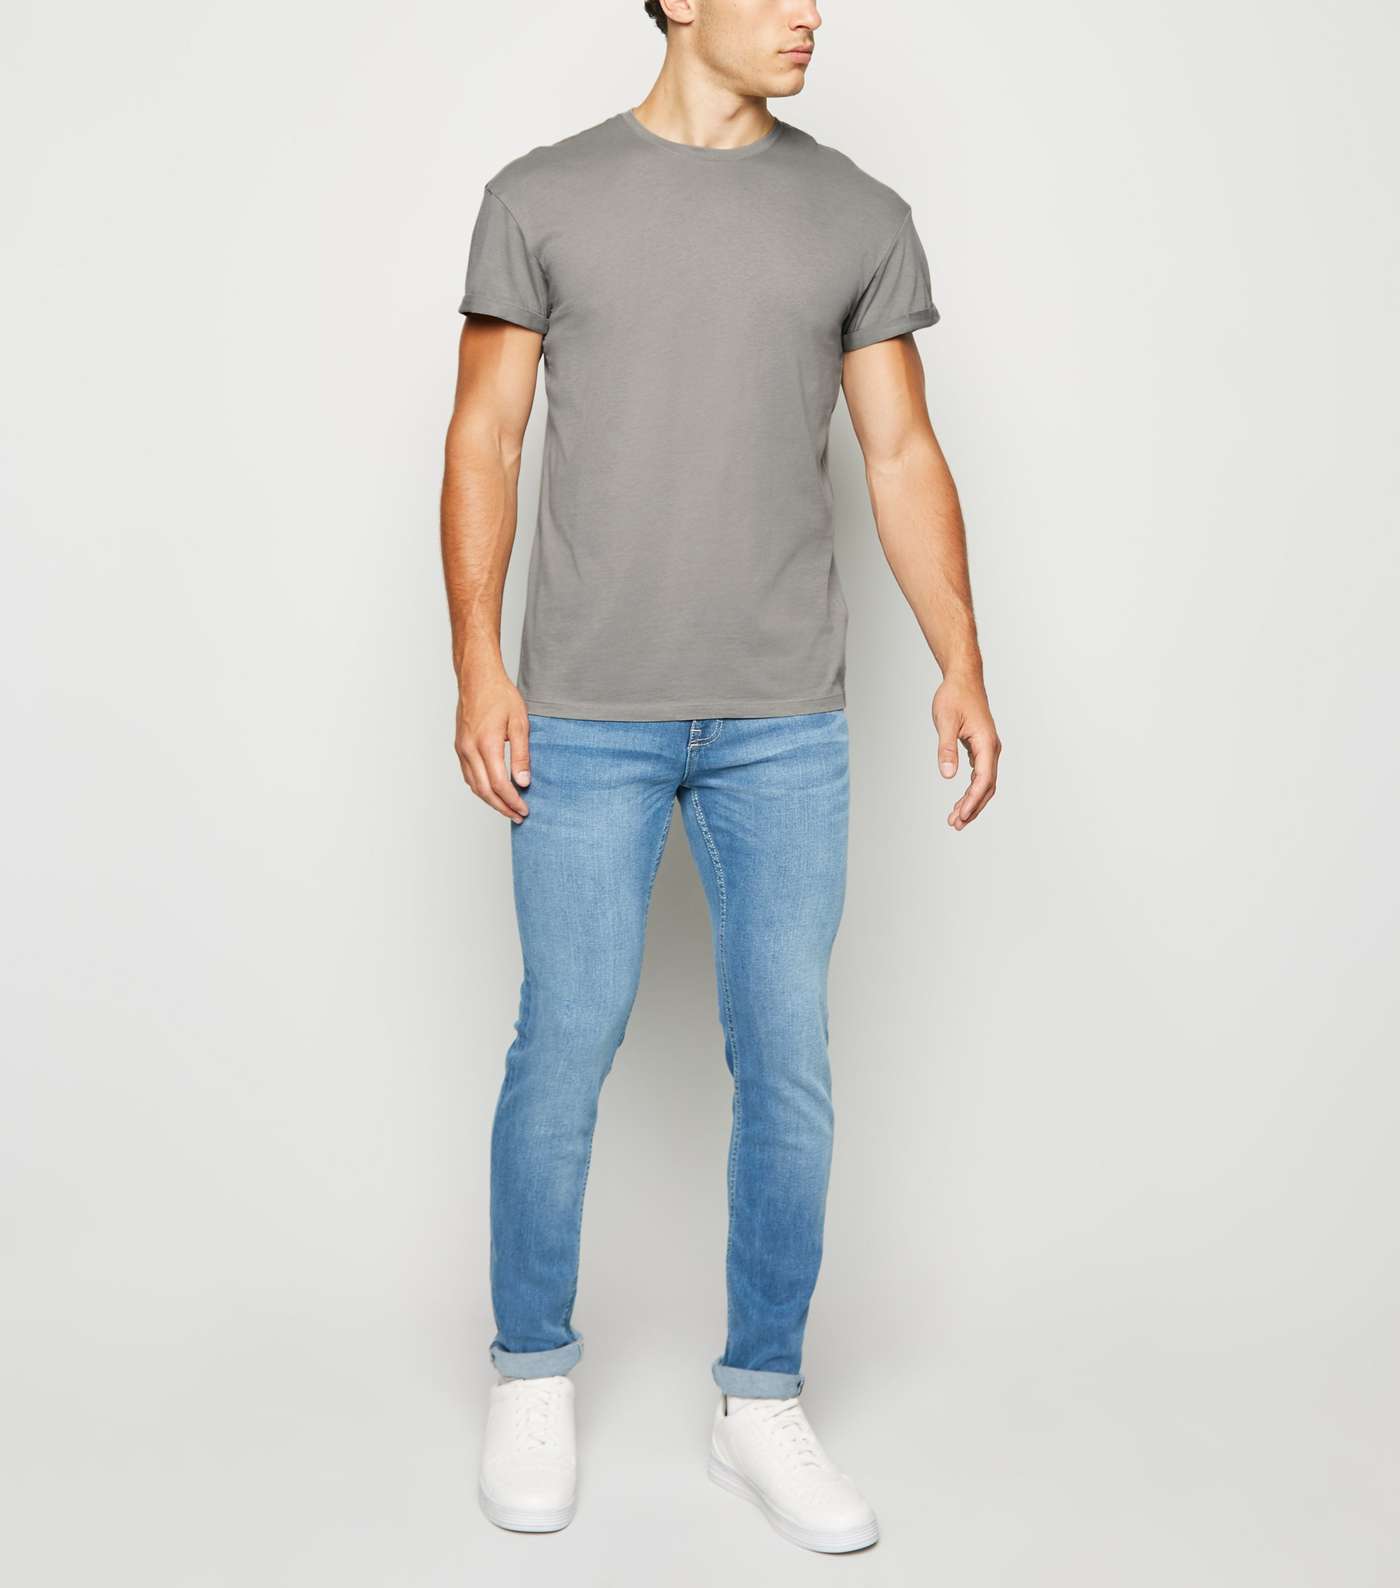 Pale Grey Short Roll Sleeve T-Shirt Image 2